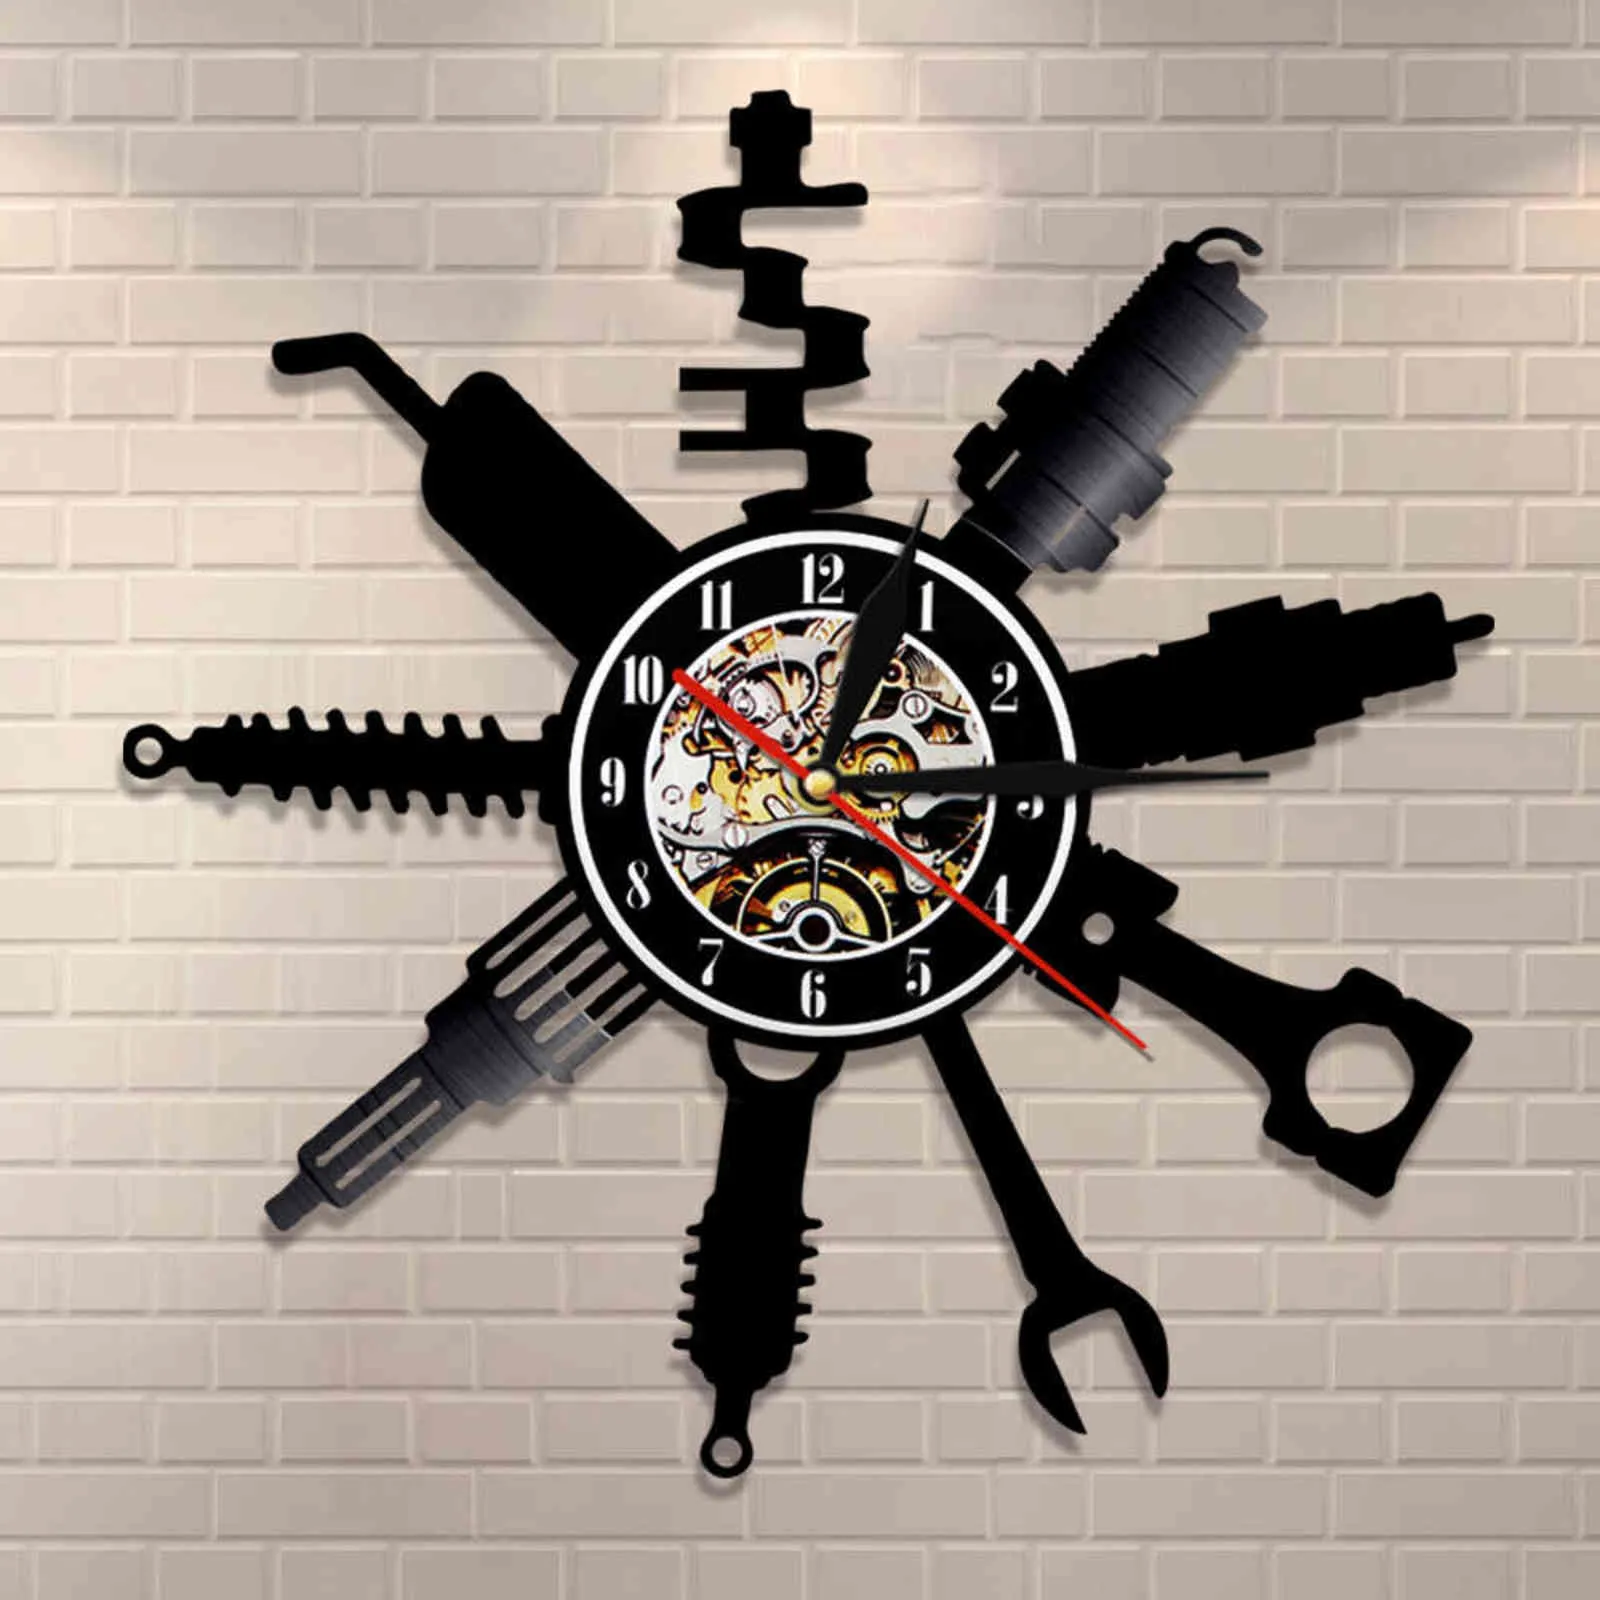 Auto Repair Shop Wall Sign Decorative Modern Wall Clock Car Mechanic Service Workshop Record Clock Garage Repairman Gift 211243T2332340